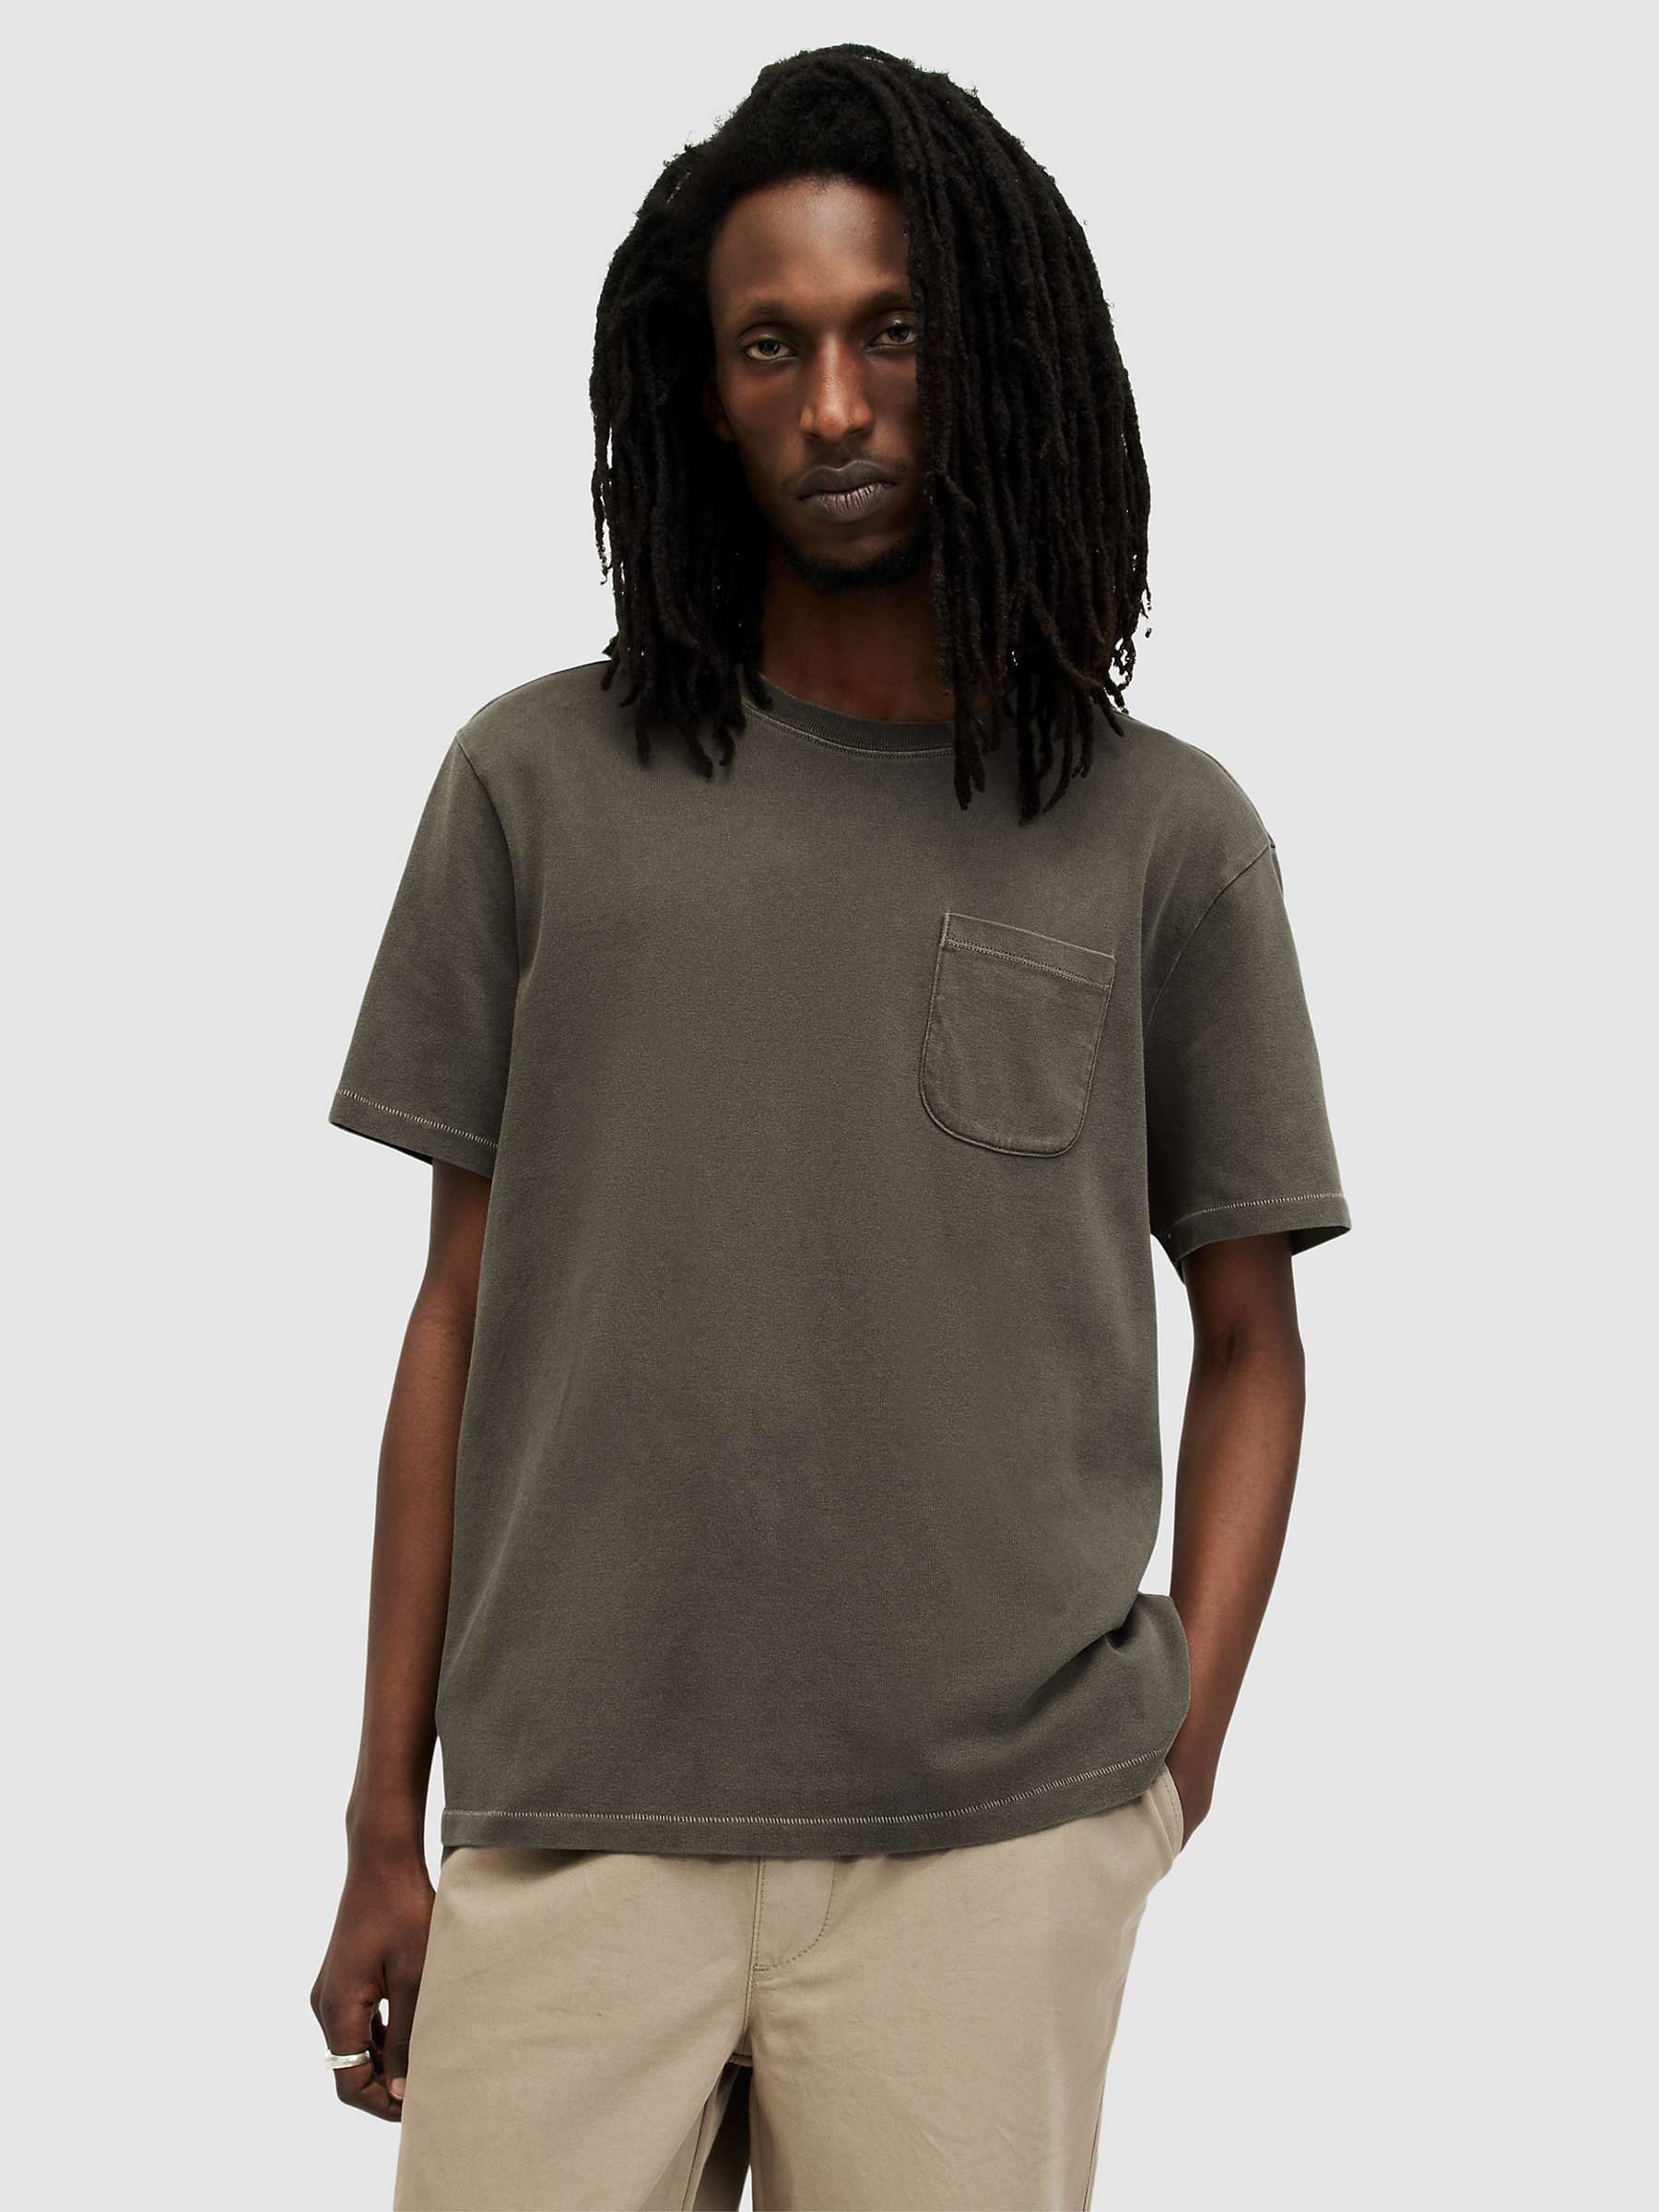 Buy AllSaints Cole Short Sleeve Crew T-Shirt, Khaki Online at johnlewis.com